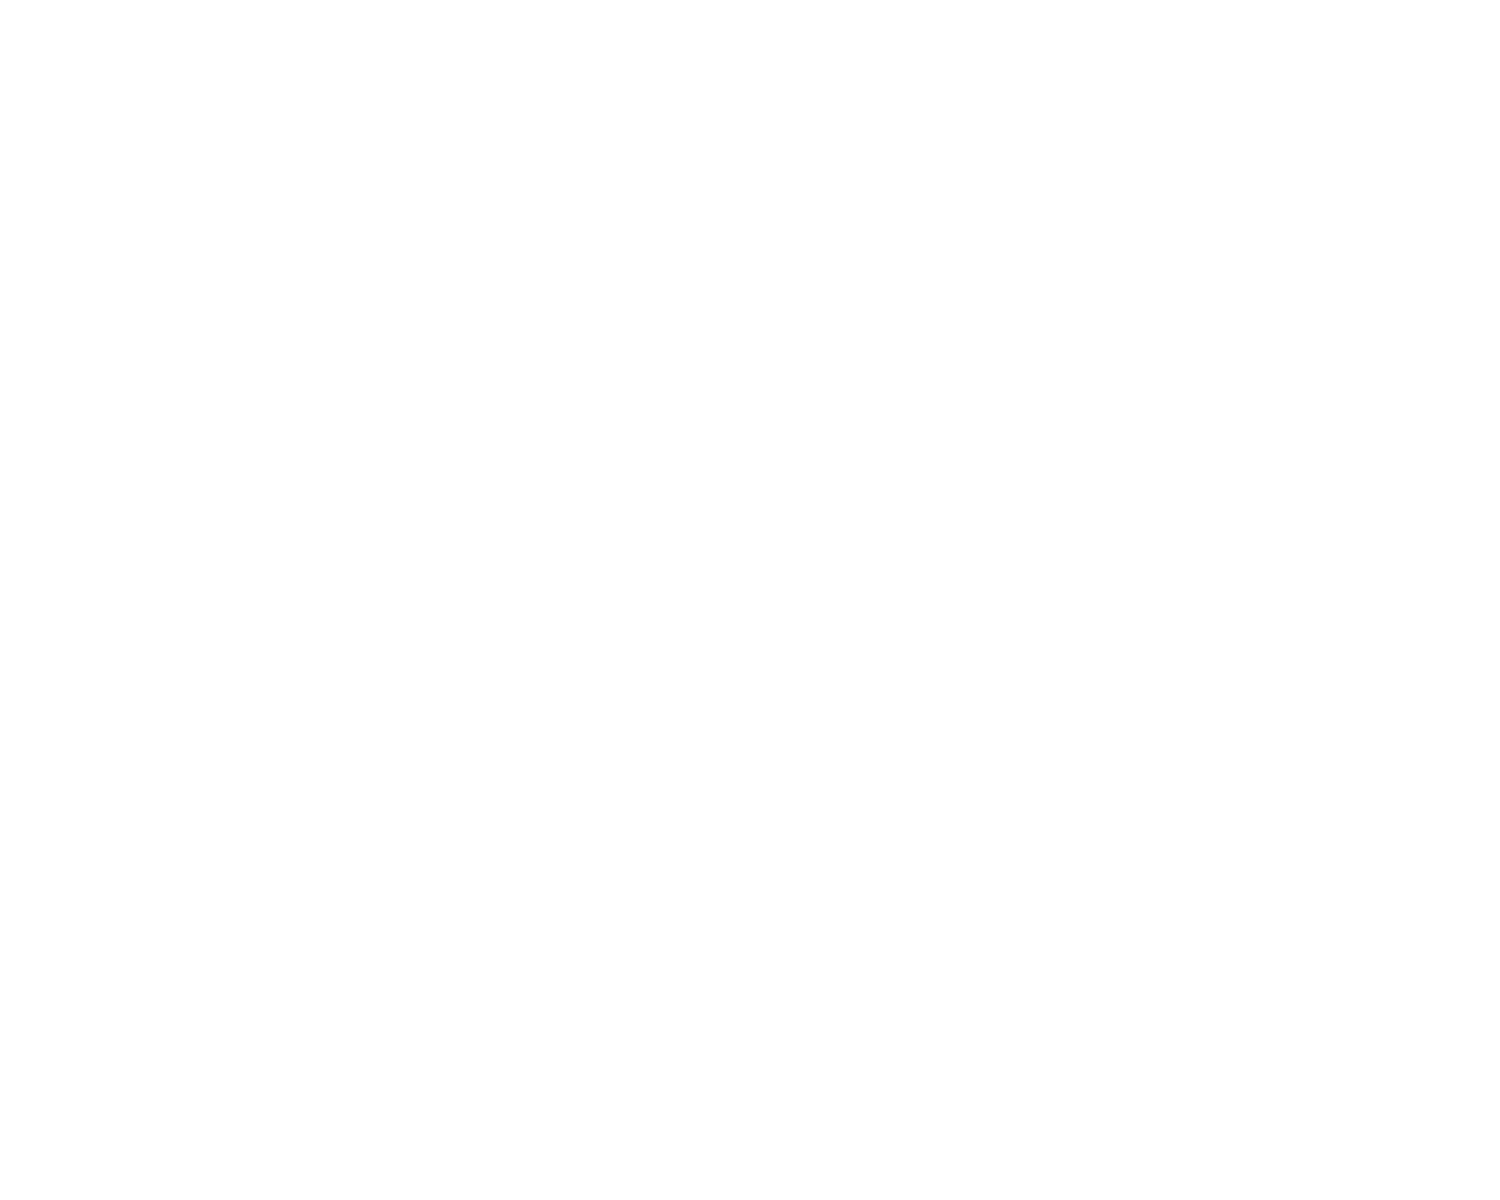 OpenMaid